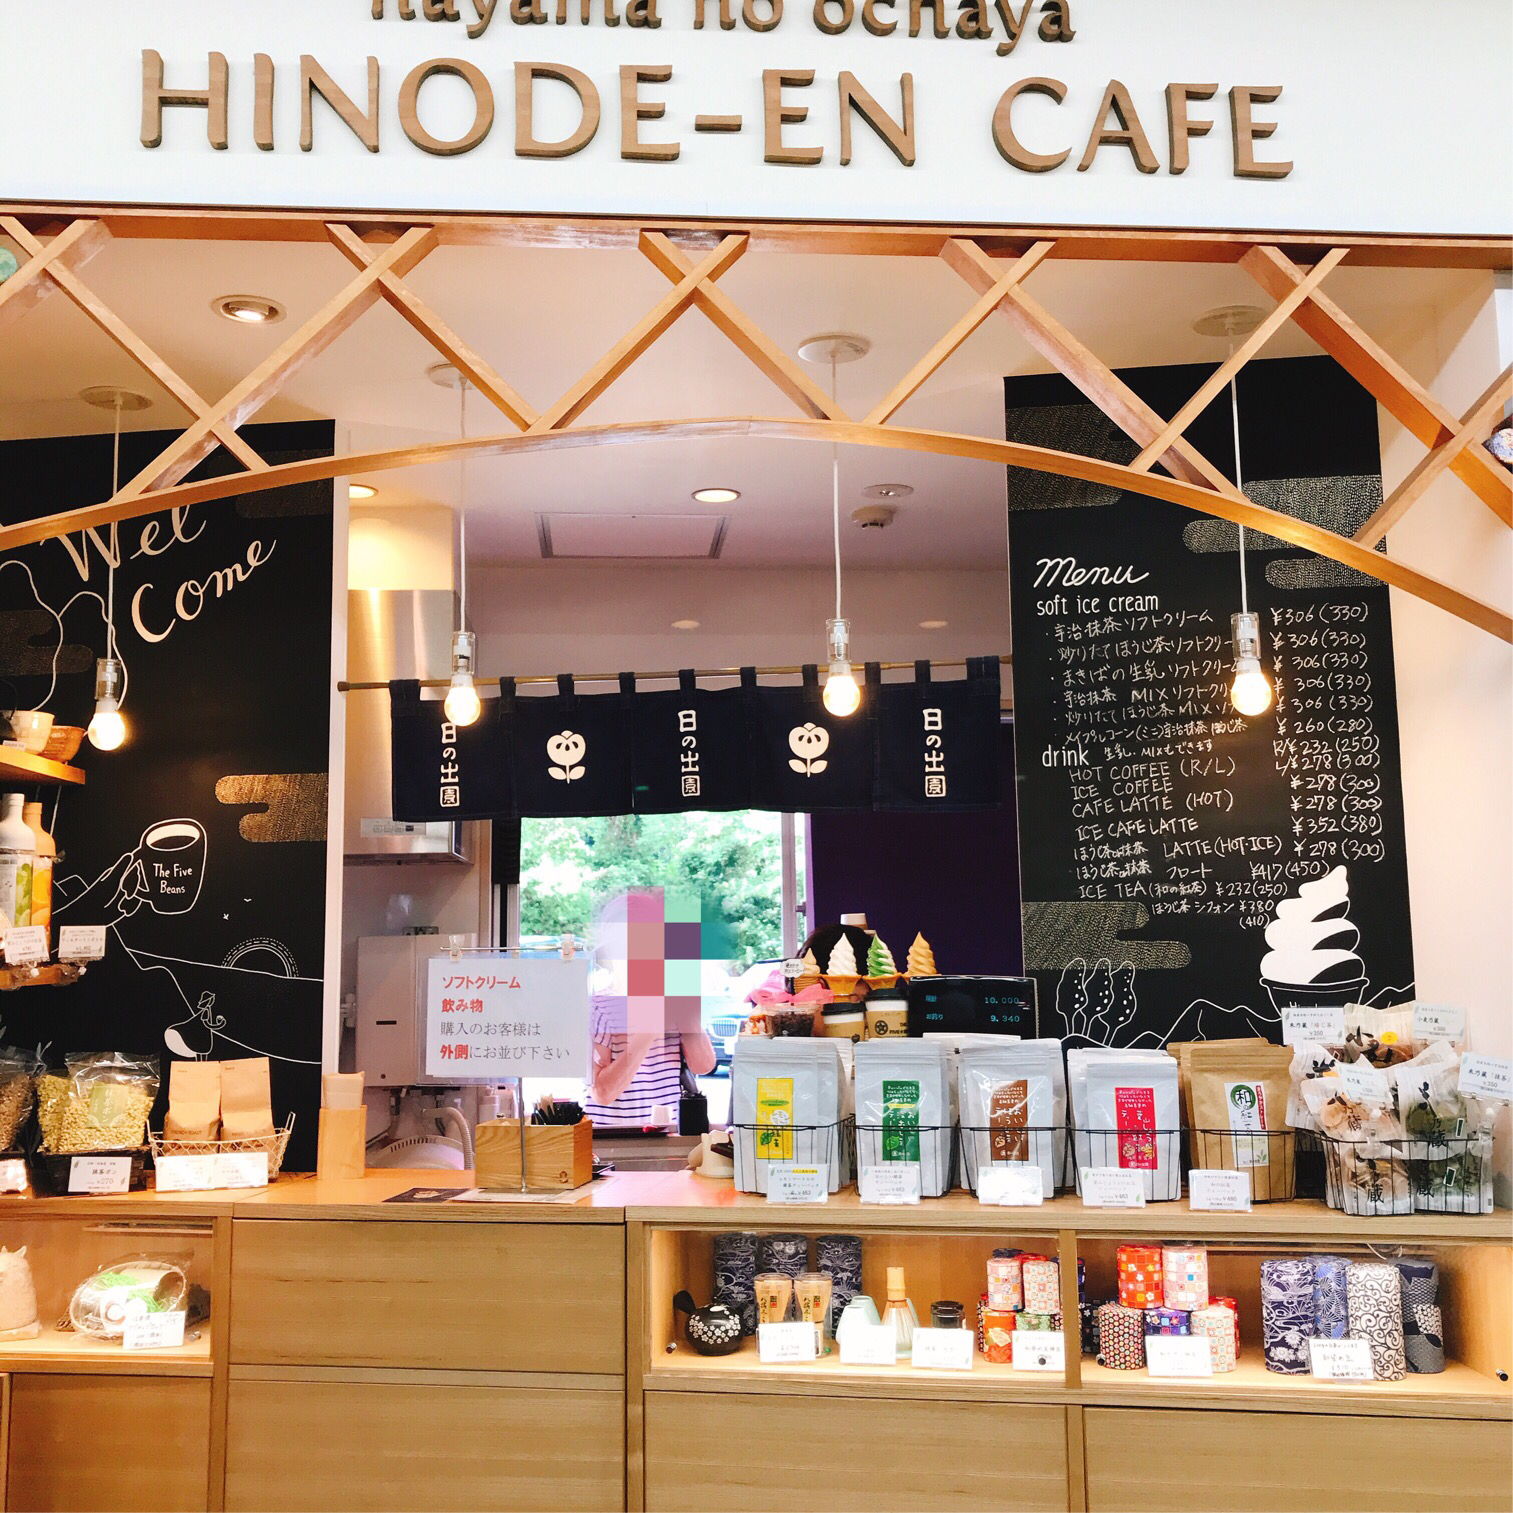 HINODE-EN cafeの内観。ソフトクリーム以外にも、いろんな味のお茶が手に入る。